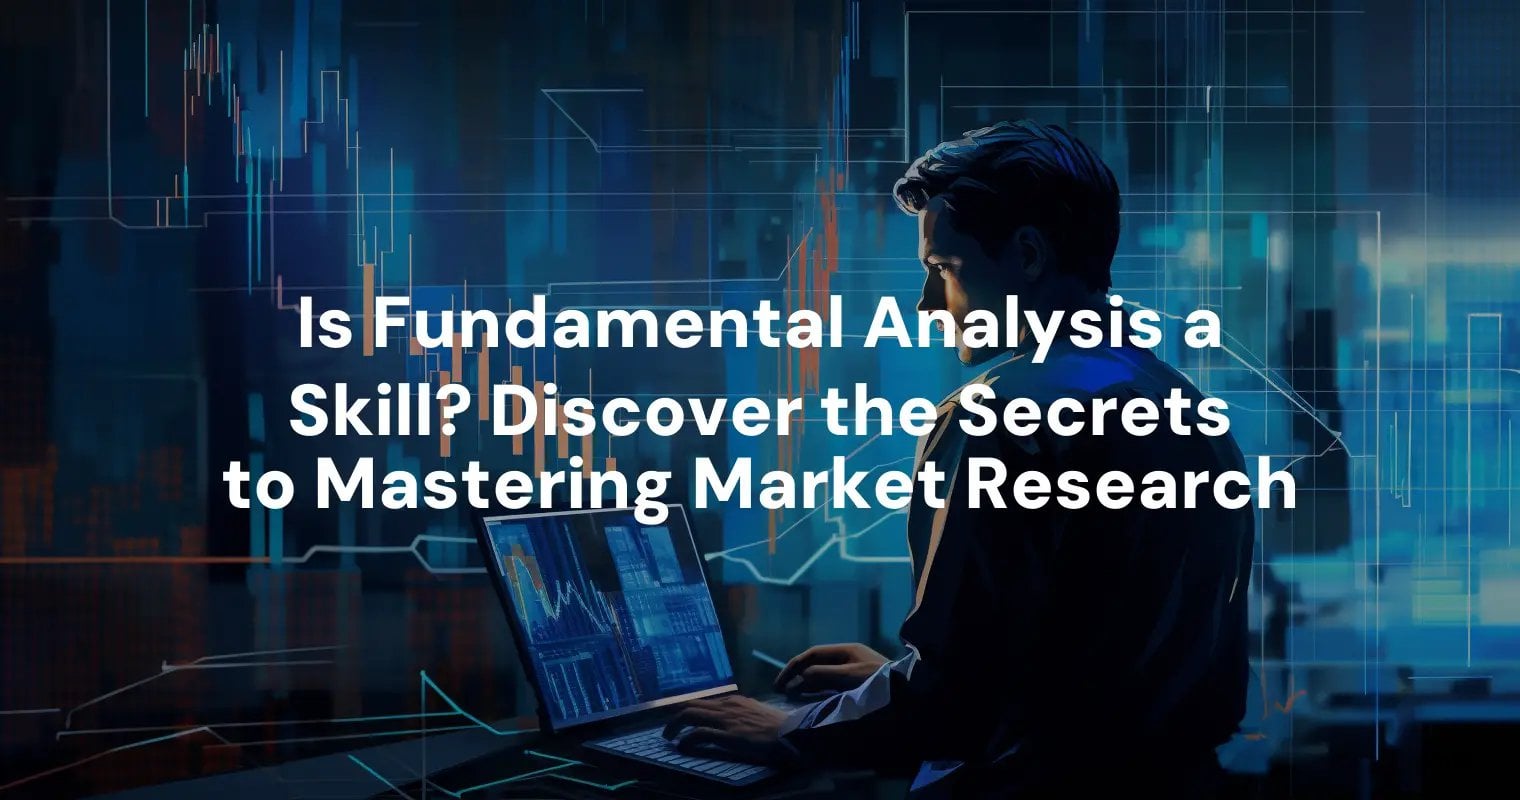 Mastering Market Research Analysis